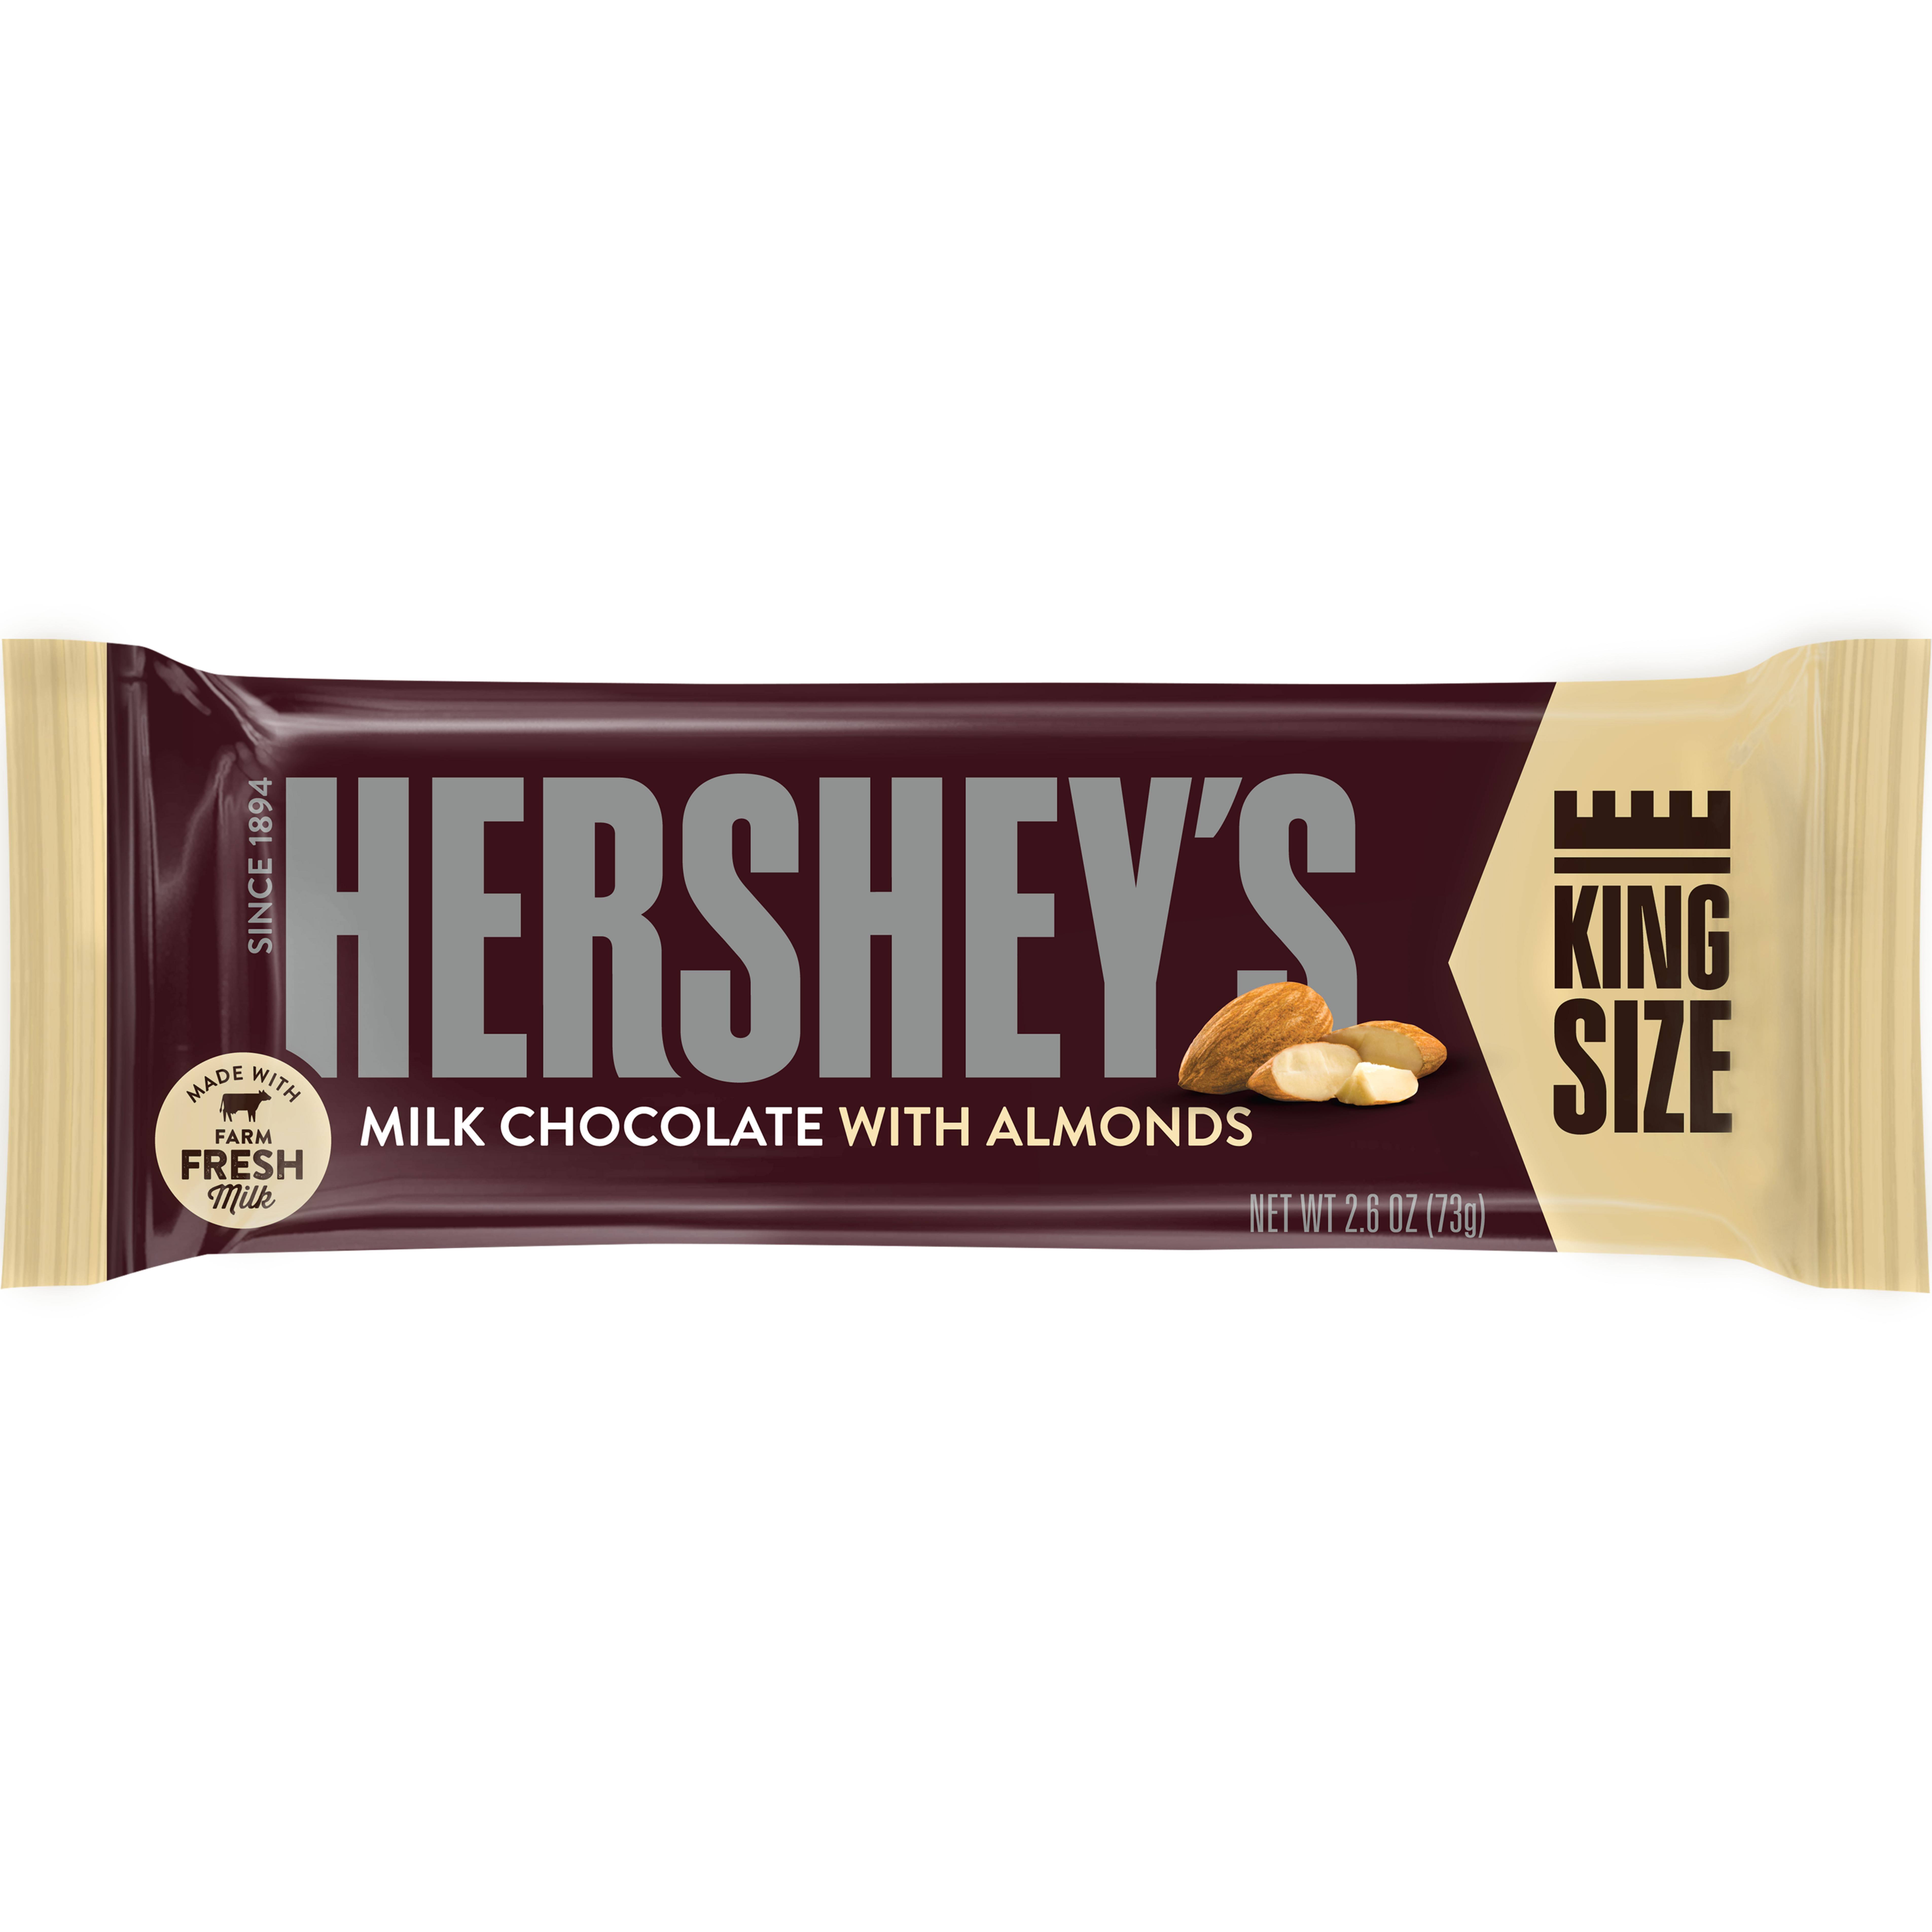 Hershey's Milk Chocolate Bars With Almonds - King Size, 2.6oz